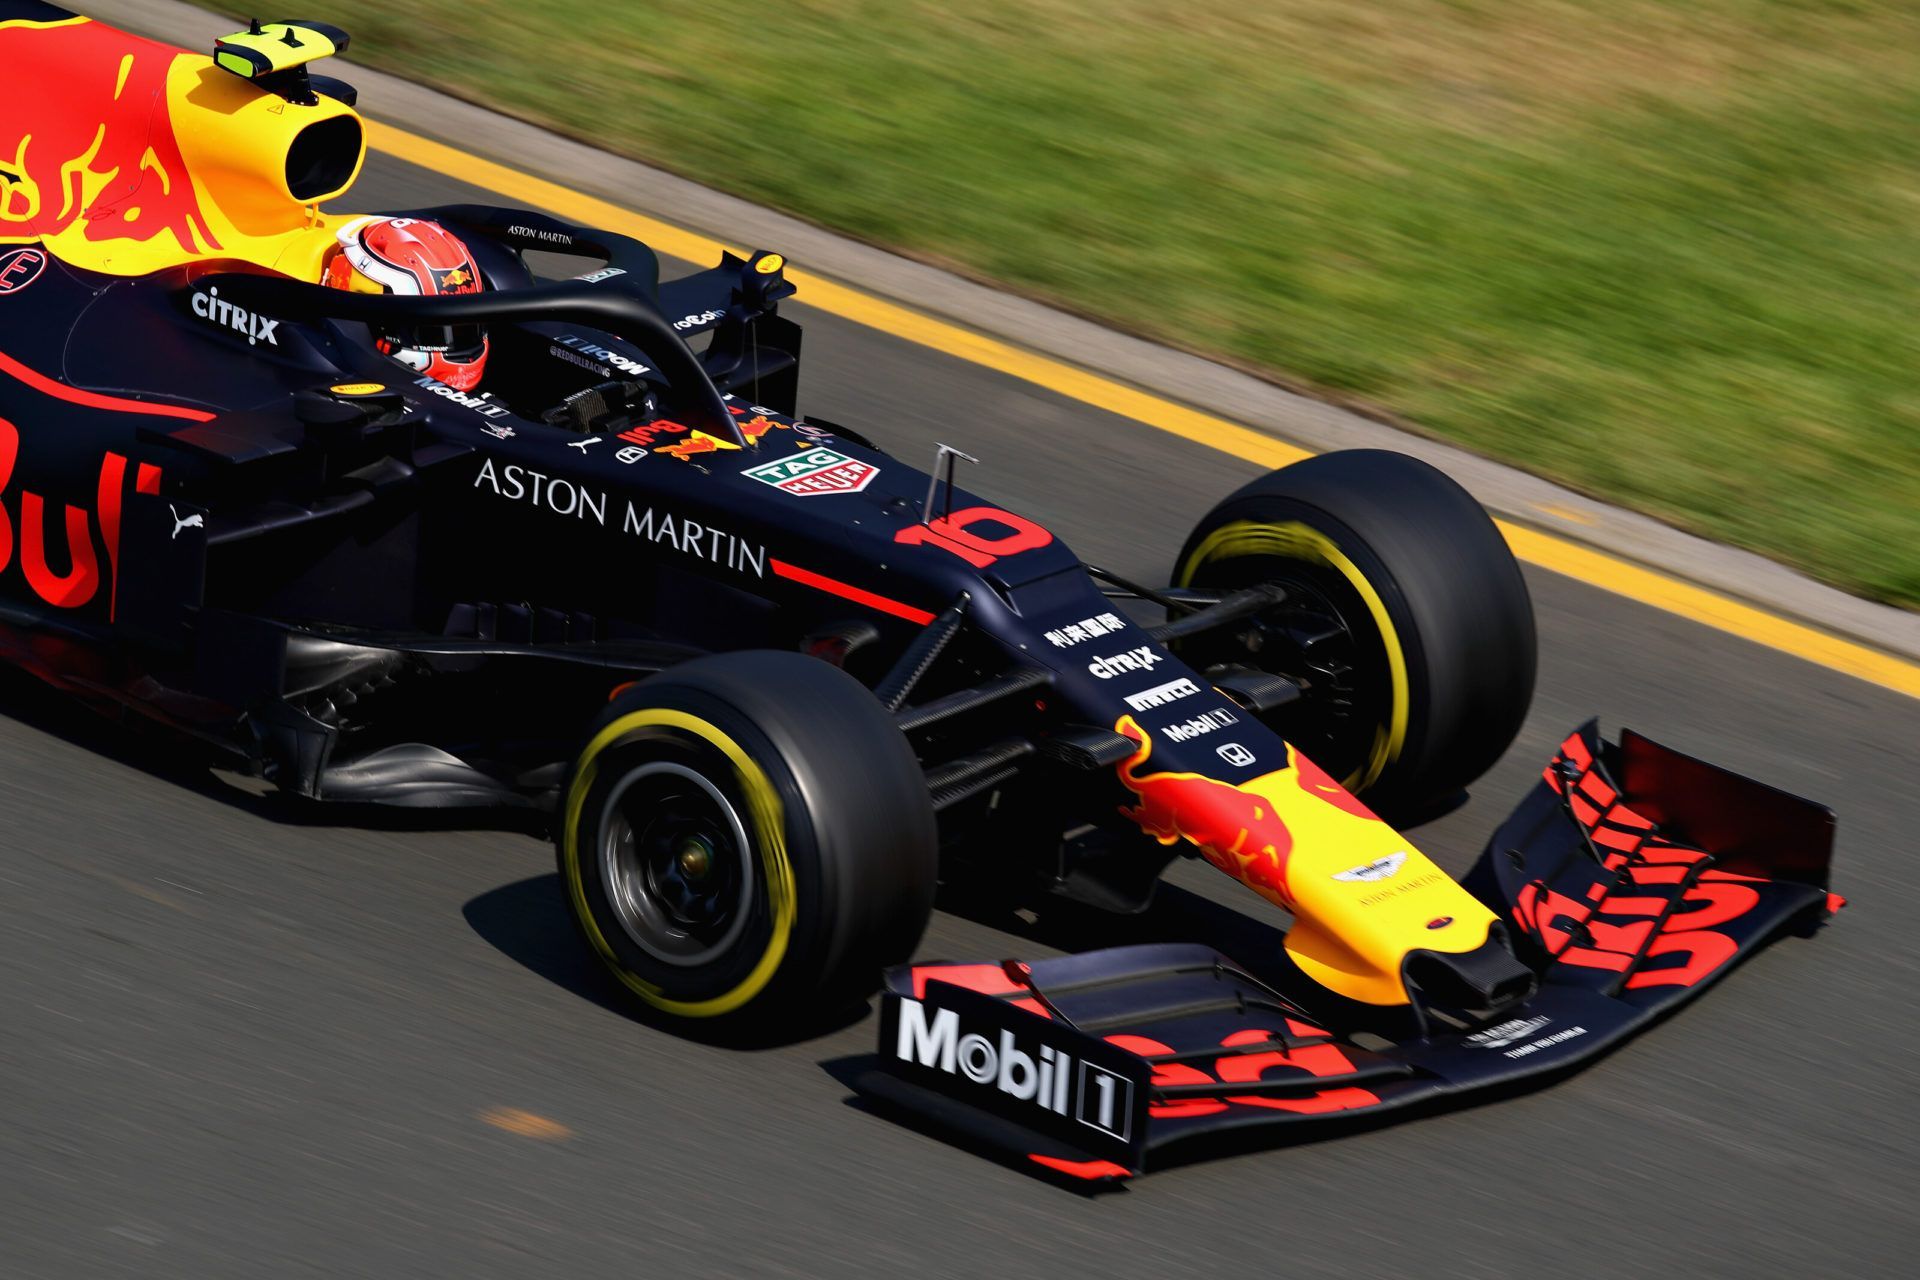 Three mandatory F1 compounds for Monaco GP revealed by Pirelli